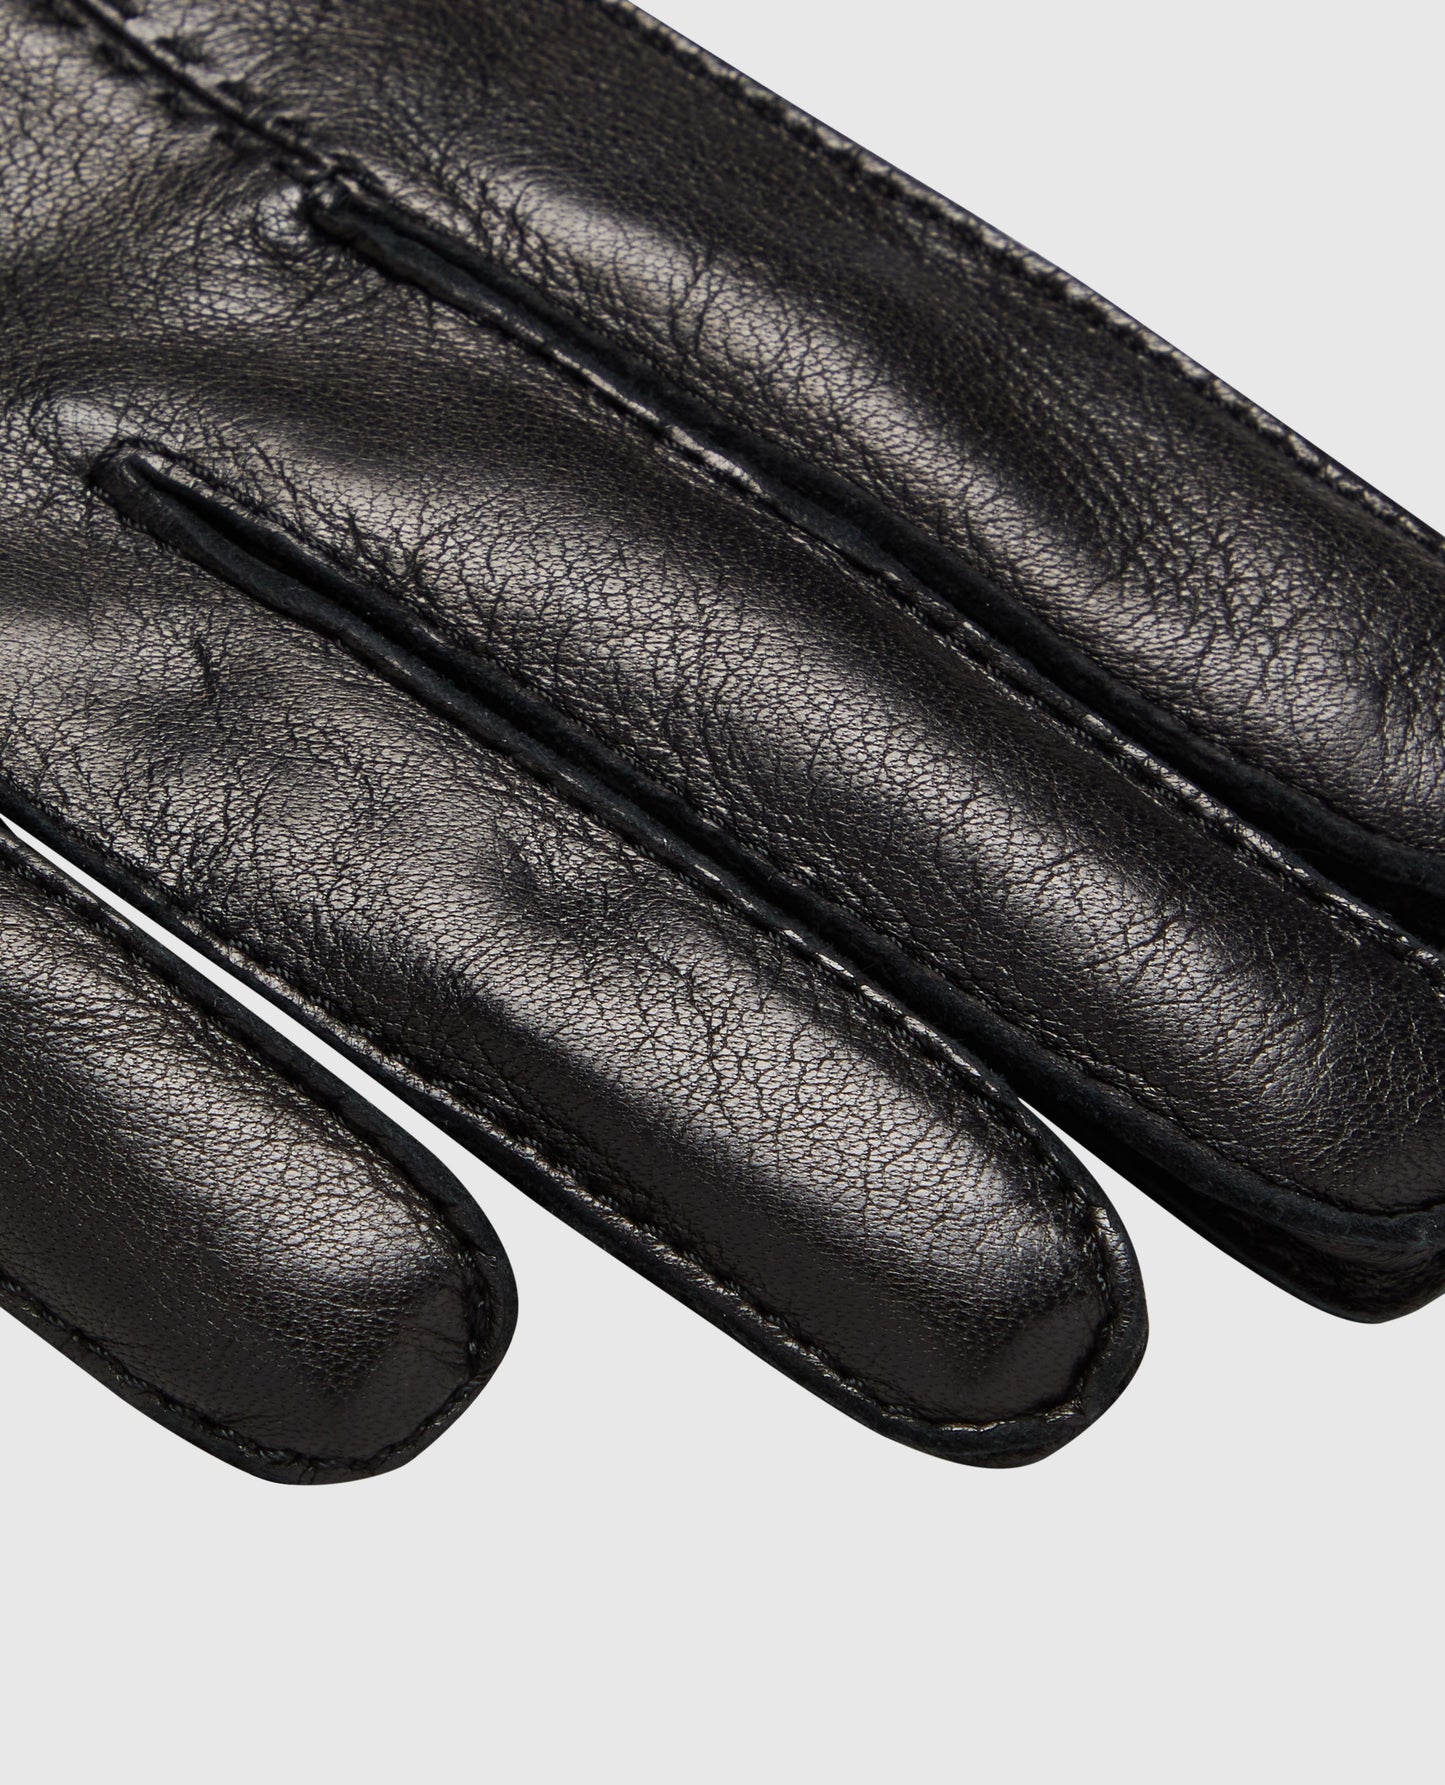 Image 3 of Luxury Italian Leather Black Cashmere-Lined Gloves